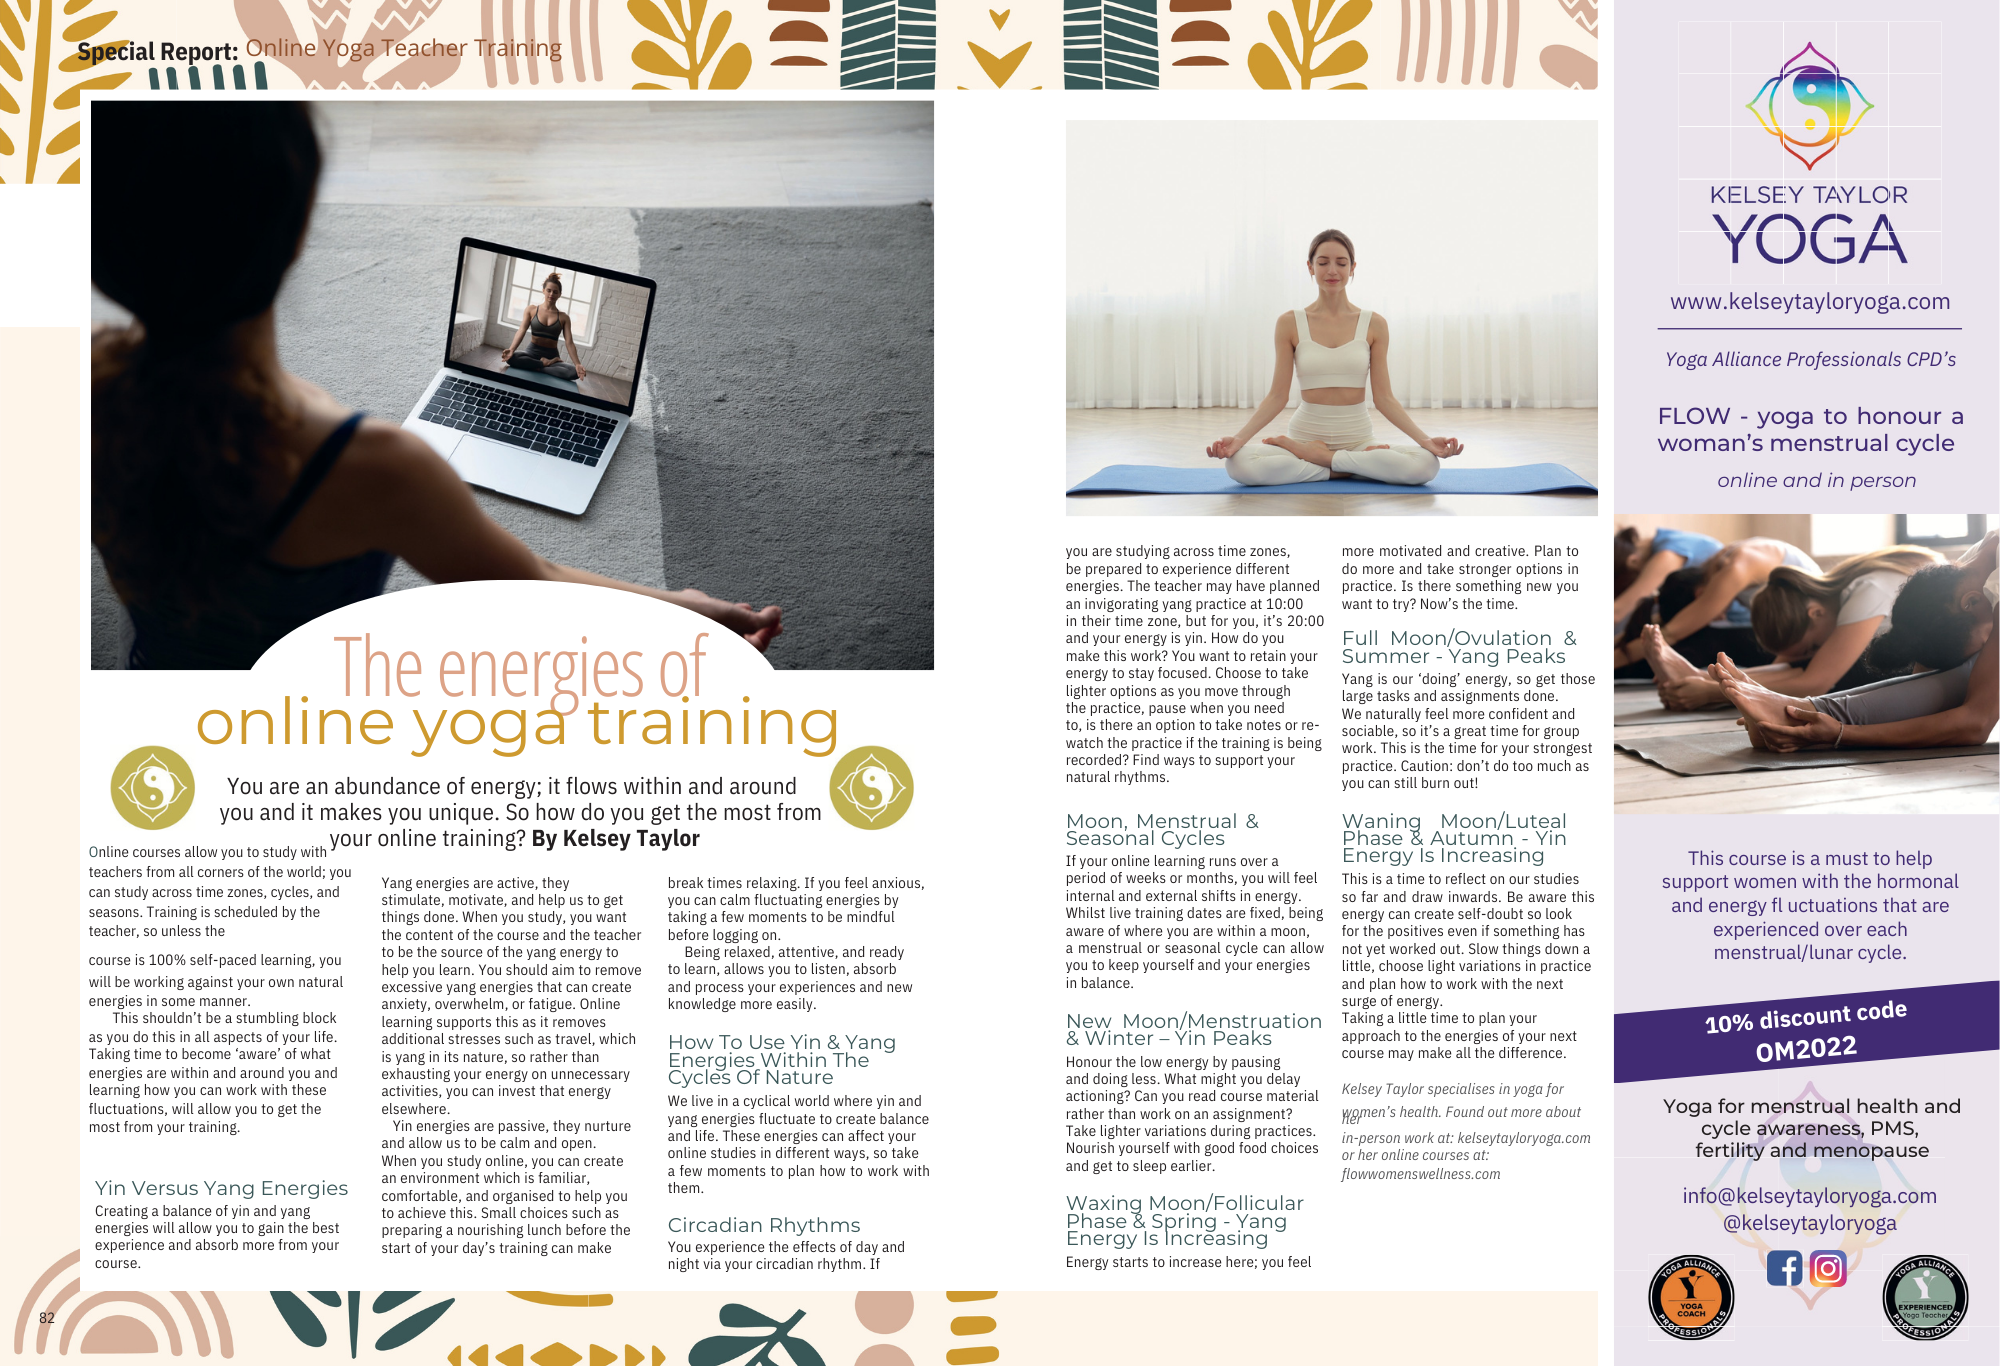 Kelsey's articles in Om Yoga magazine